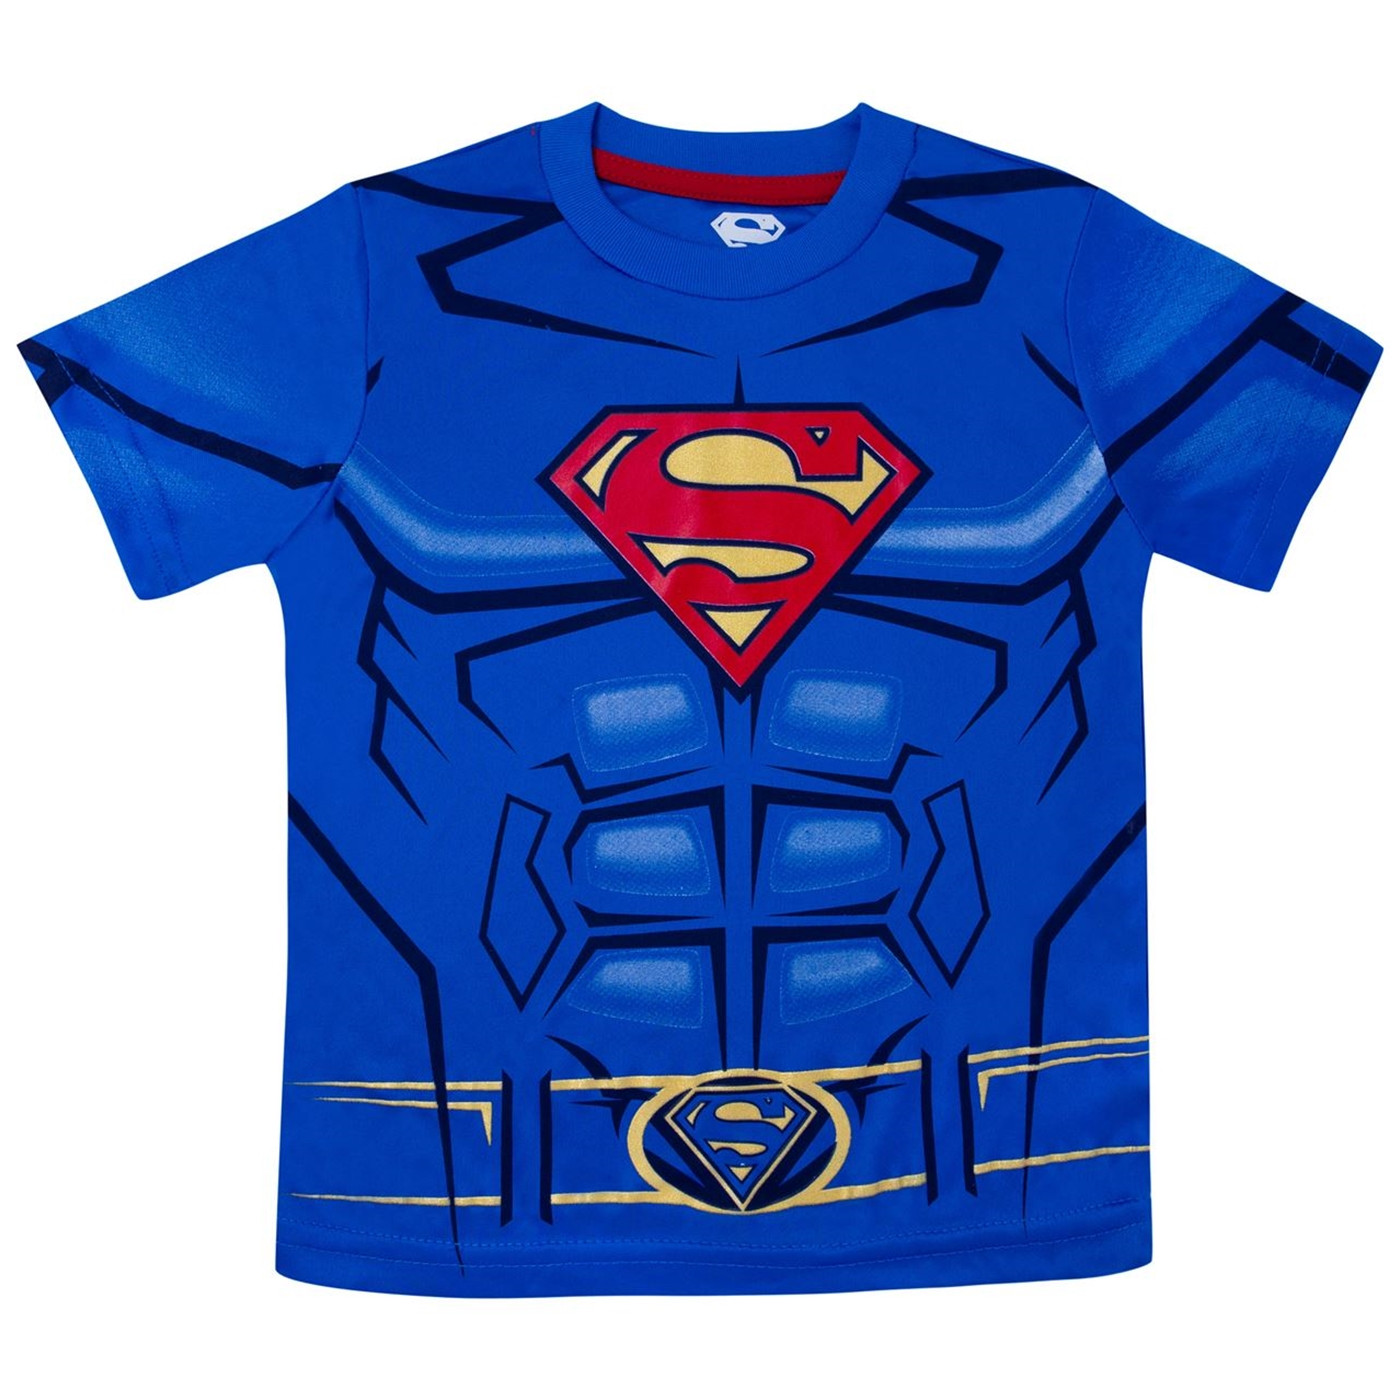 Superman Performance Costume Kids Short Set